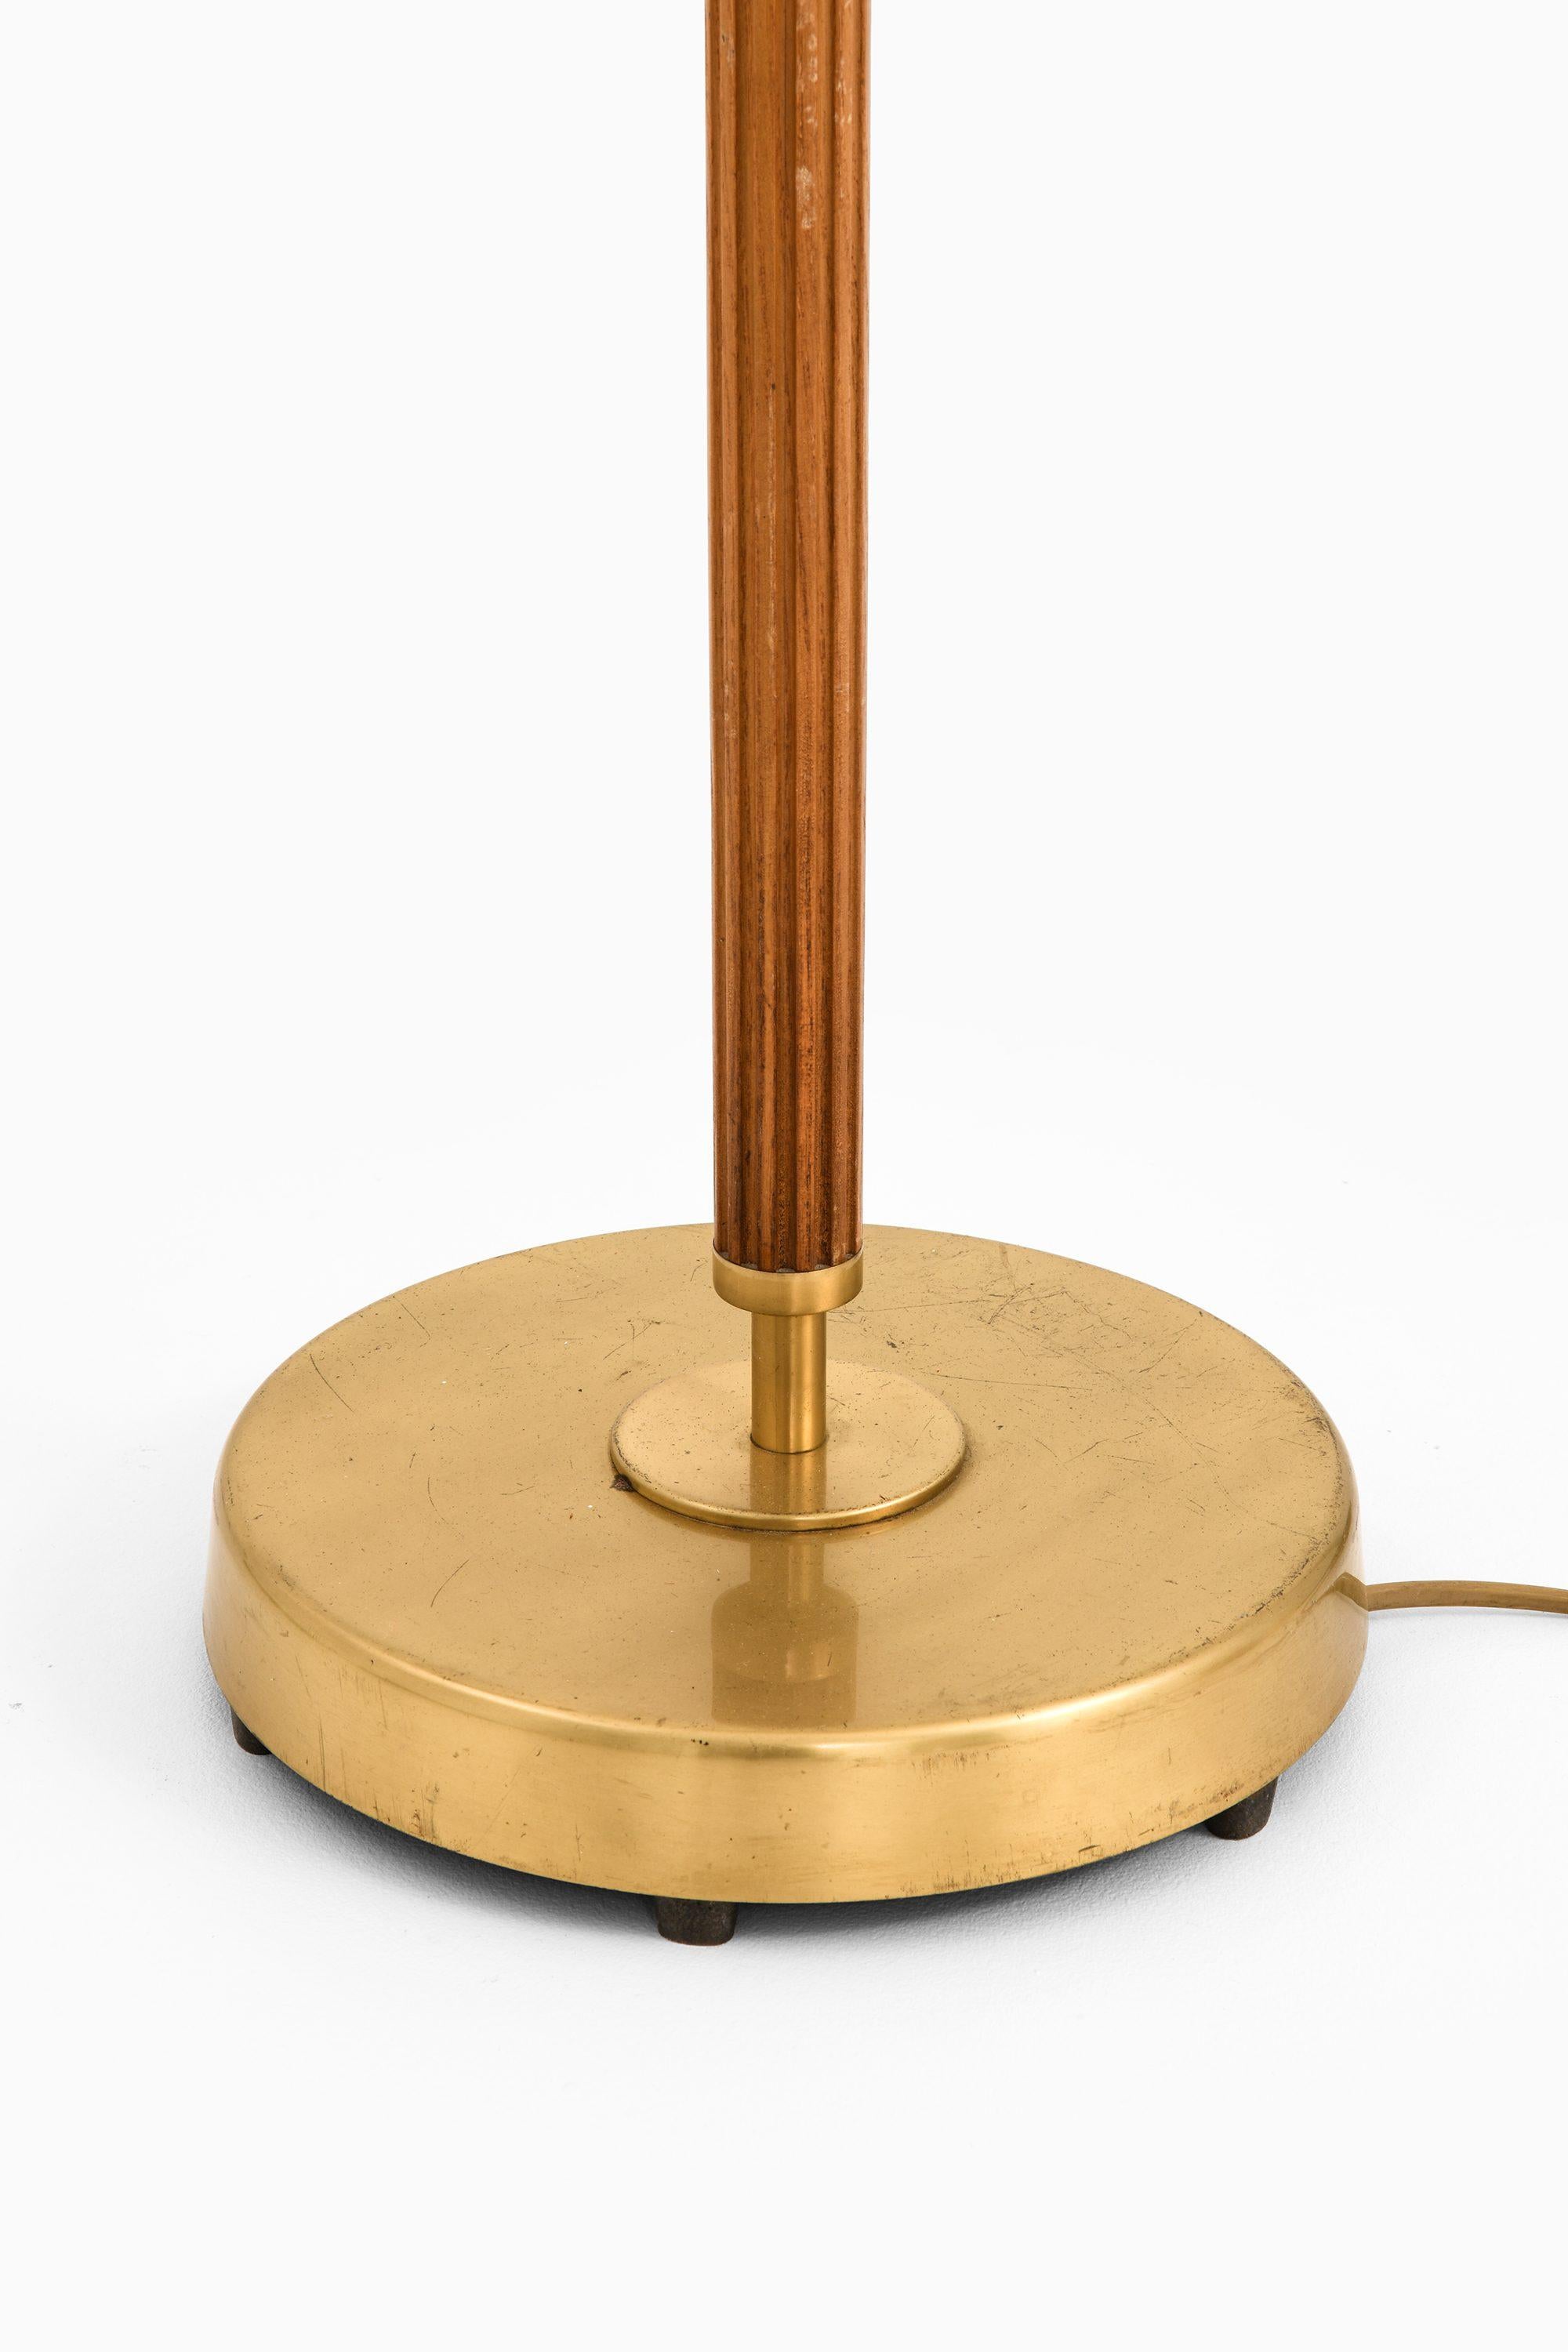 Scandinavian Modern Floor Lamp in Brass and Fabric by Hans Bergström, 1950's For Sale